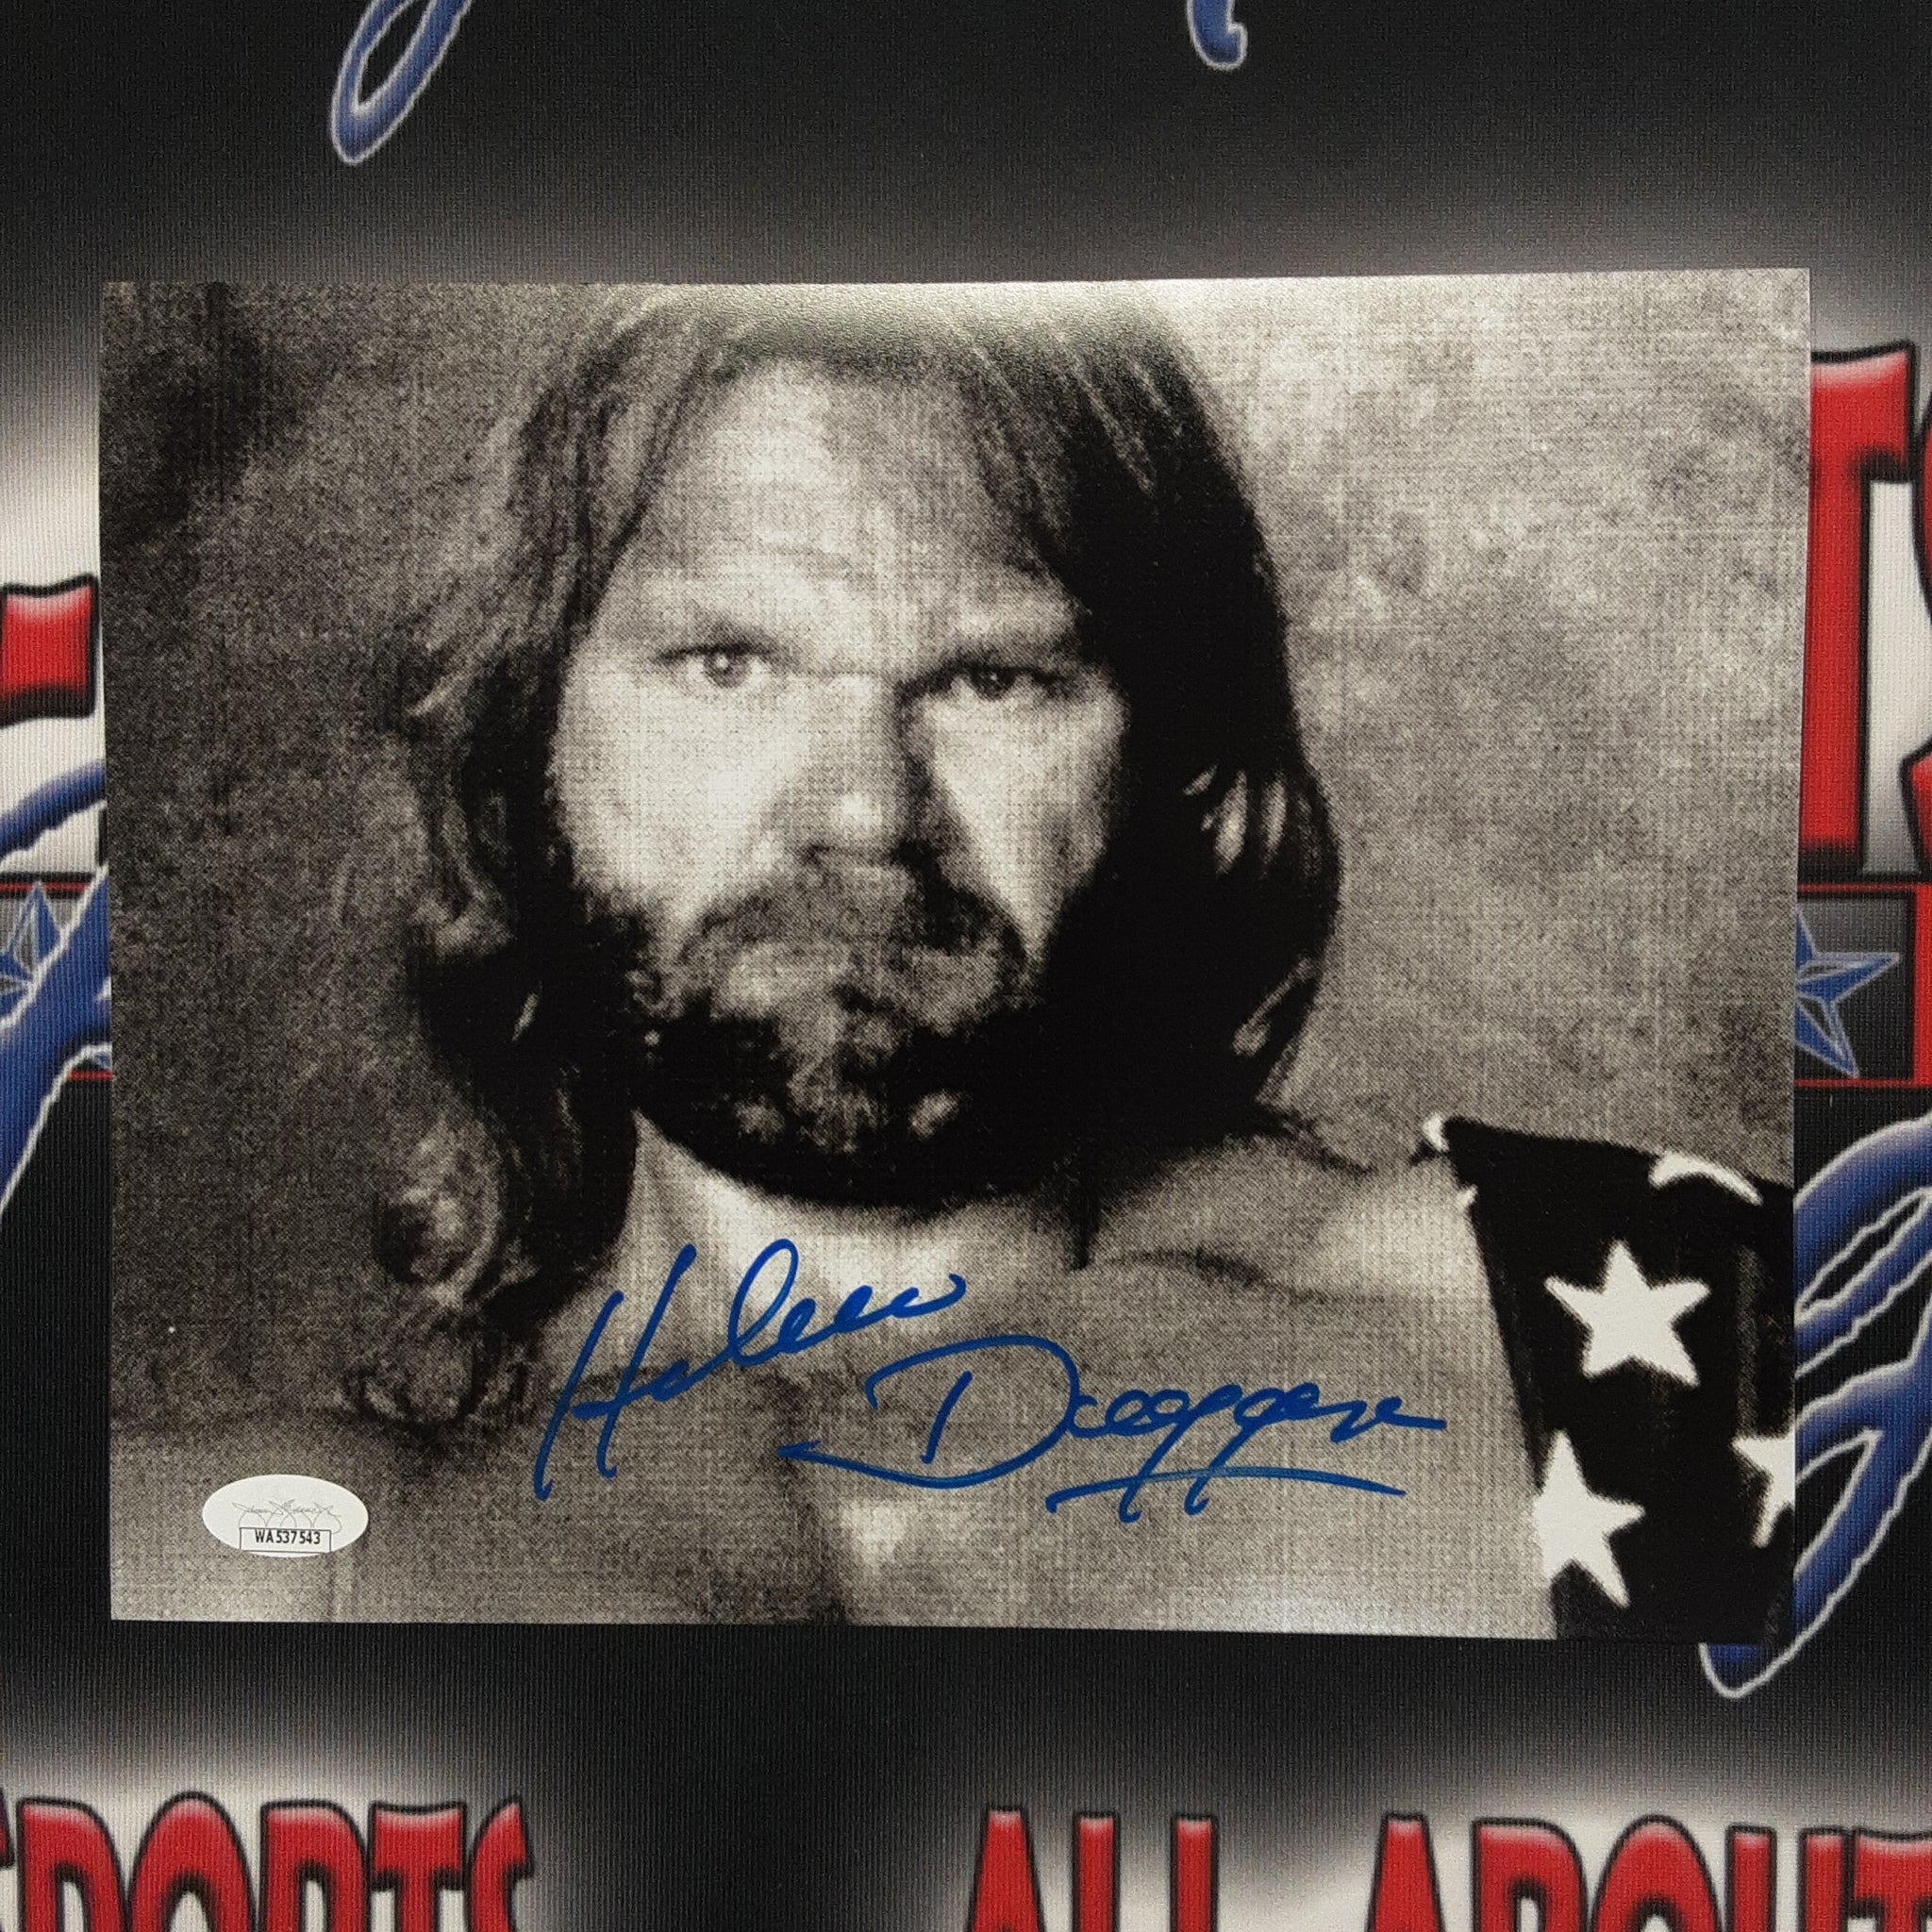 "Hacksaw" Jim Duggan Authentic Signed 8x10 Photo Autographed JSA.